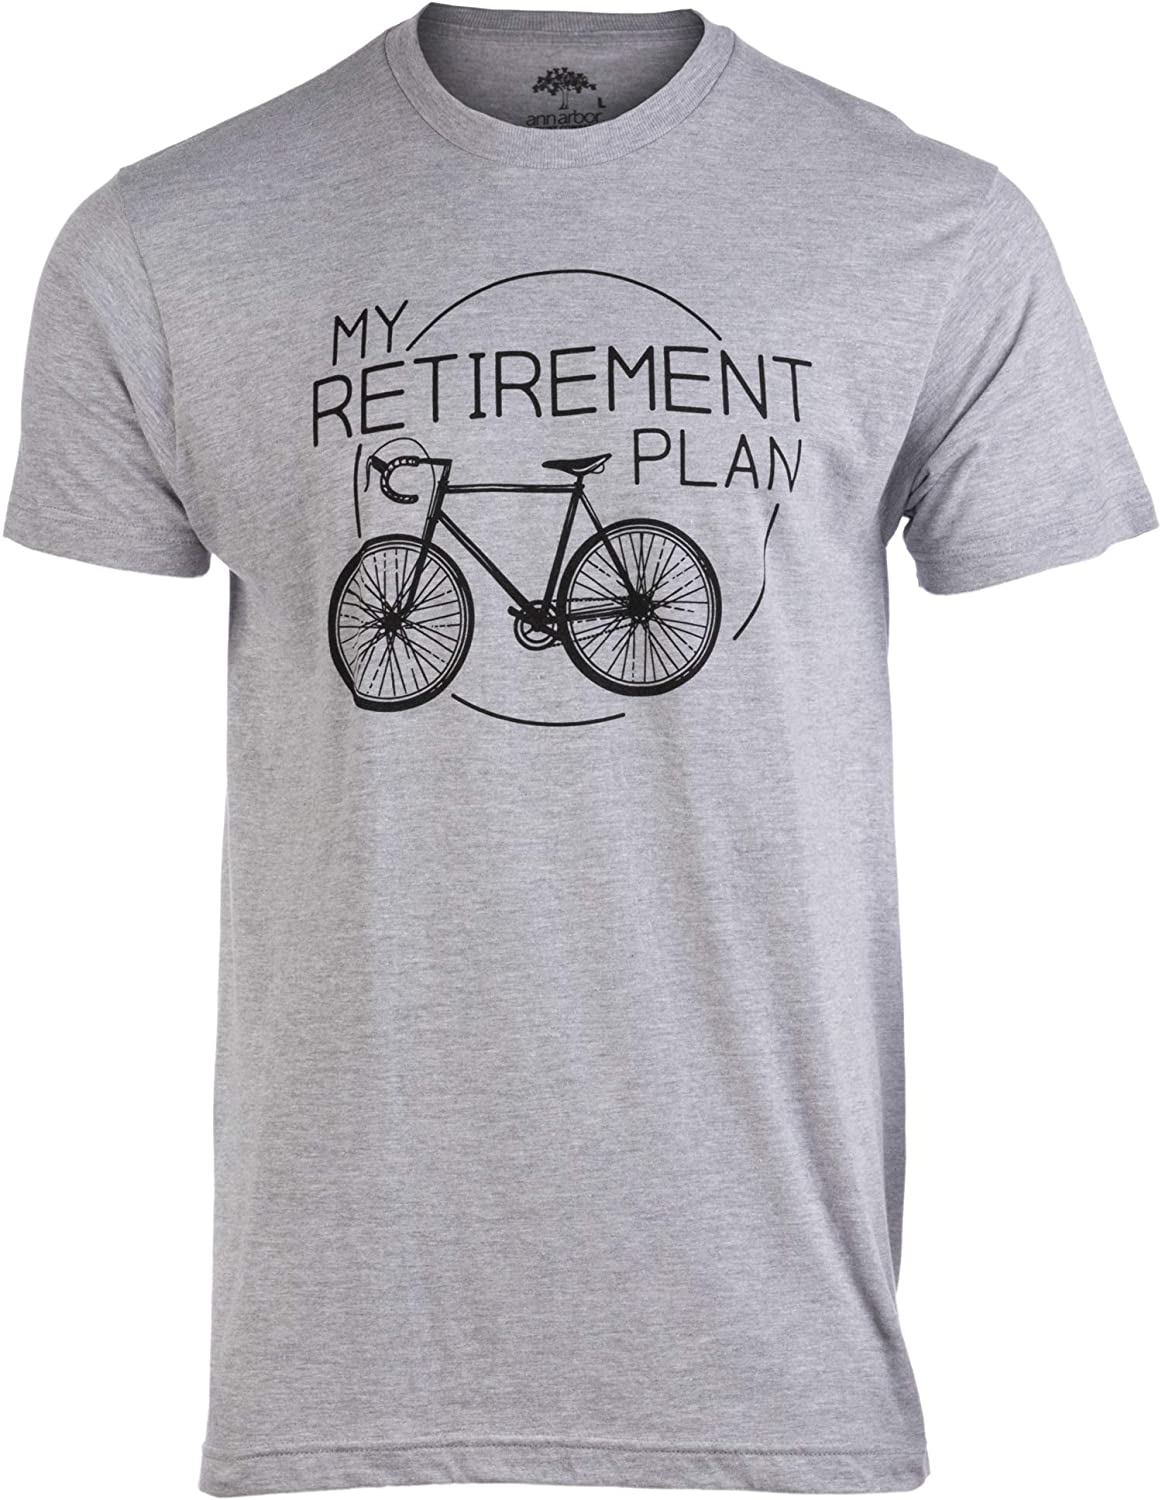 My Retirement Plan (Bicycle) | Funny Bike Riding Rider Retired Cyclist Man T-Shirt